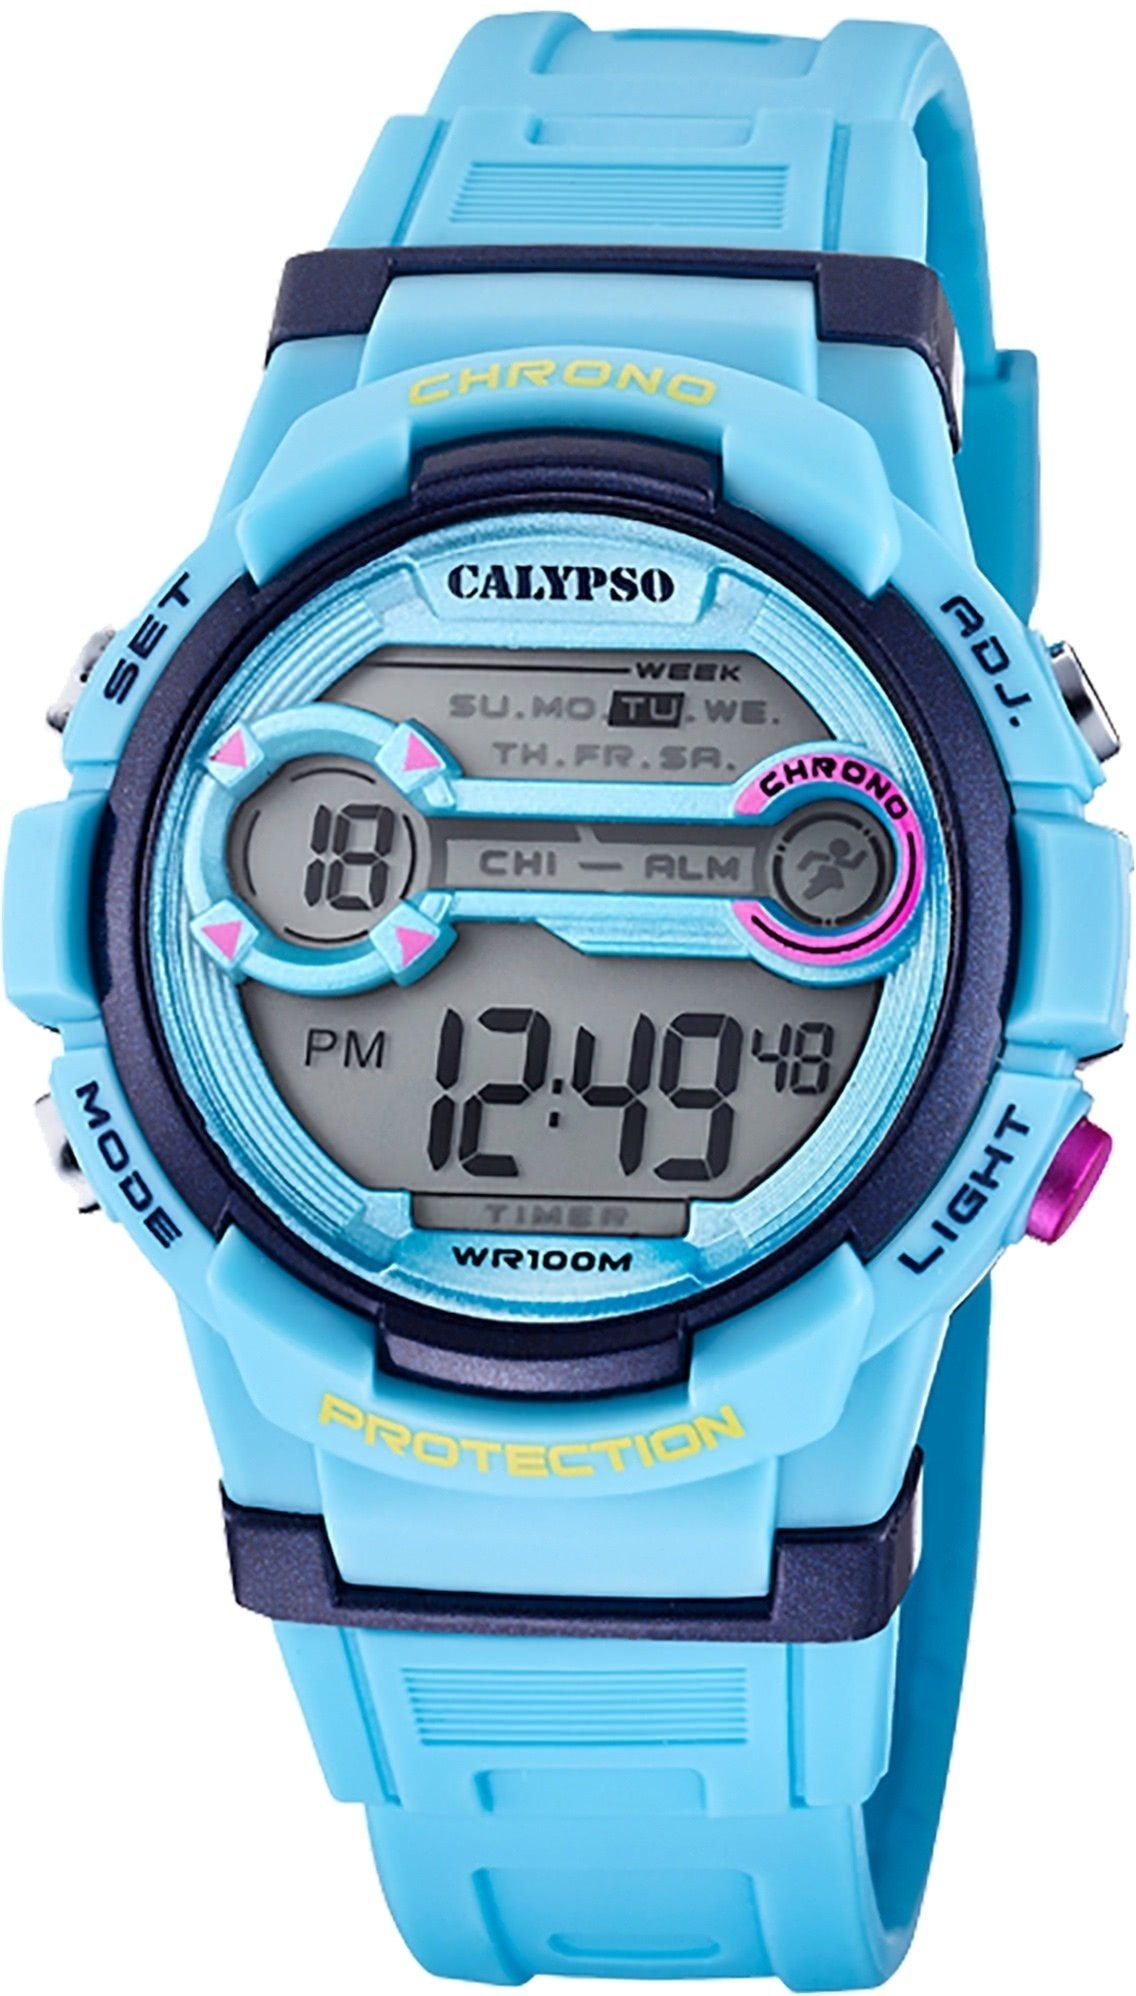 CALYPSO WATCHES Digitaluhr »UK5808/2 Calypso Jugend Uhr Digital K5808/2  PU«, (Digitaluhr), Jugenduhr rund, groß (ca. 40mm), Kunststoffarmband,  Sport-Style online kaufen | OTTO